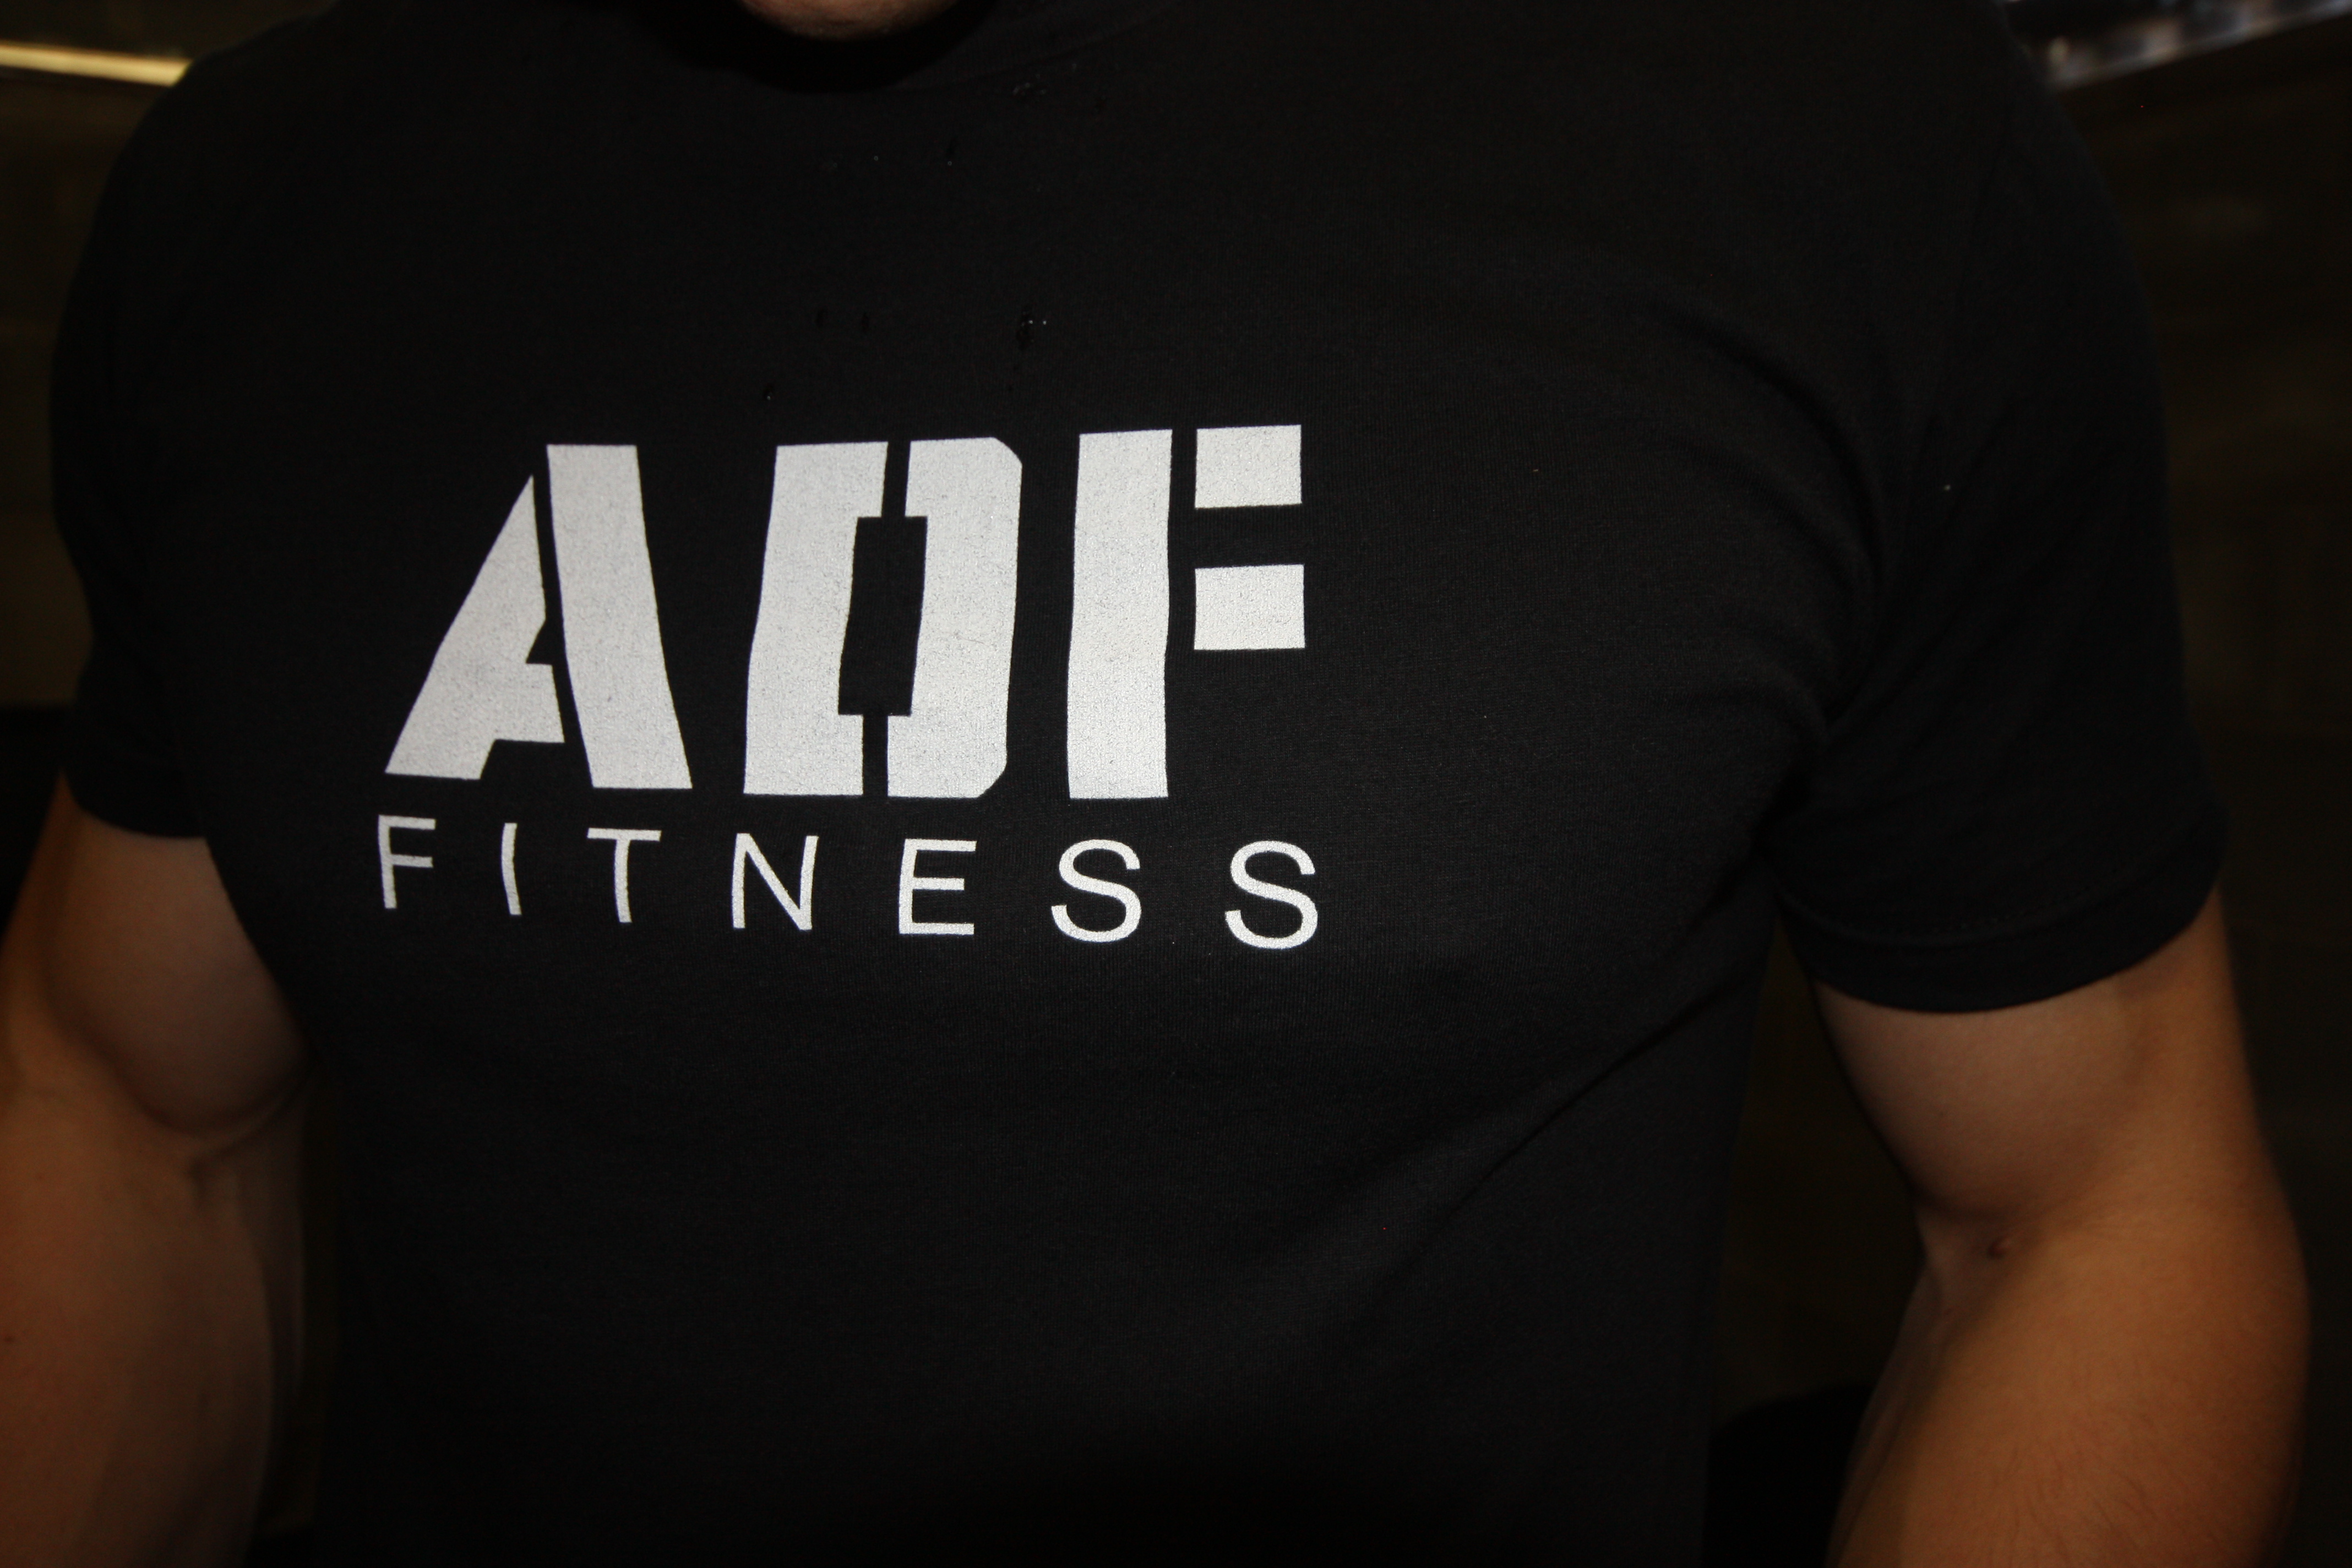 adf fitness shirt